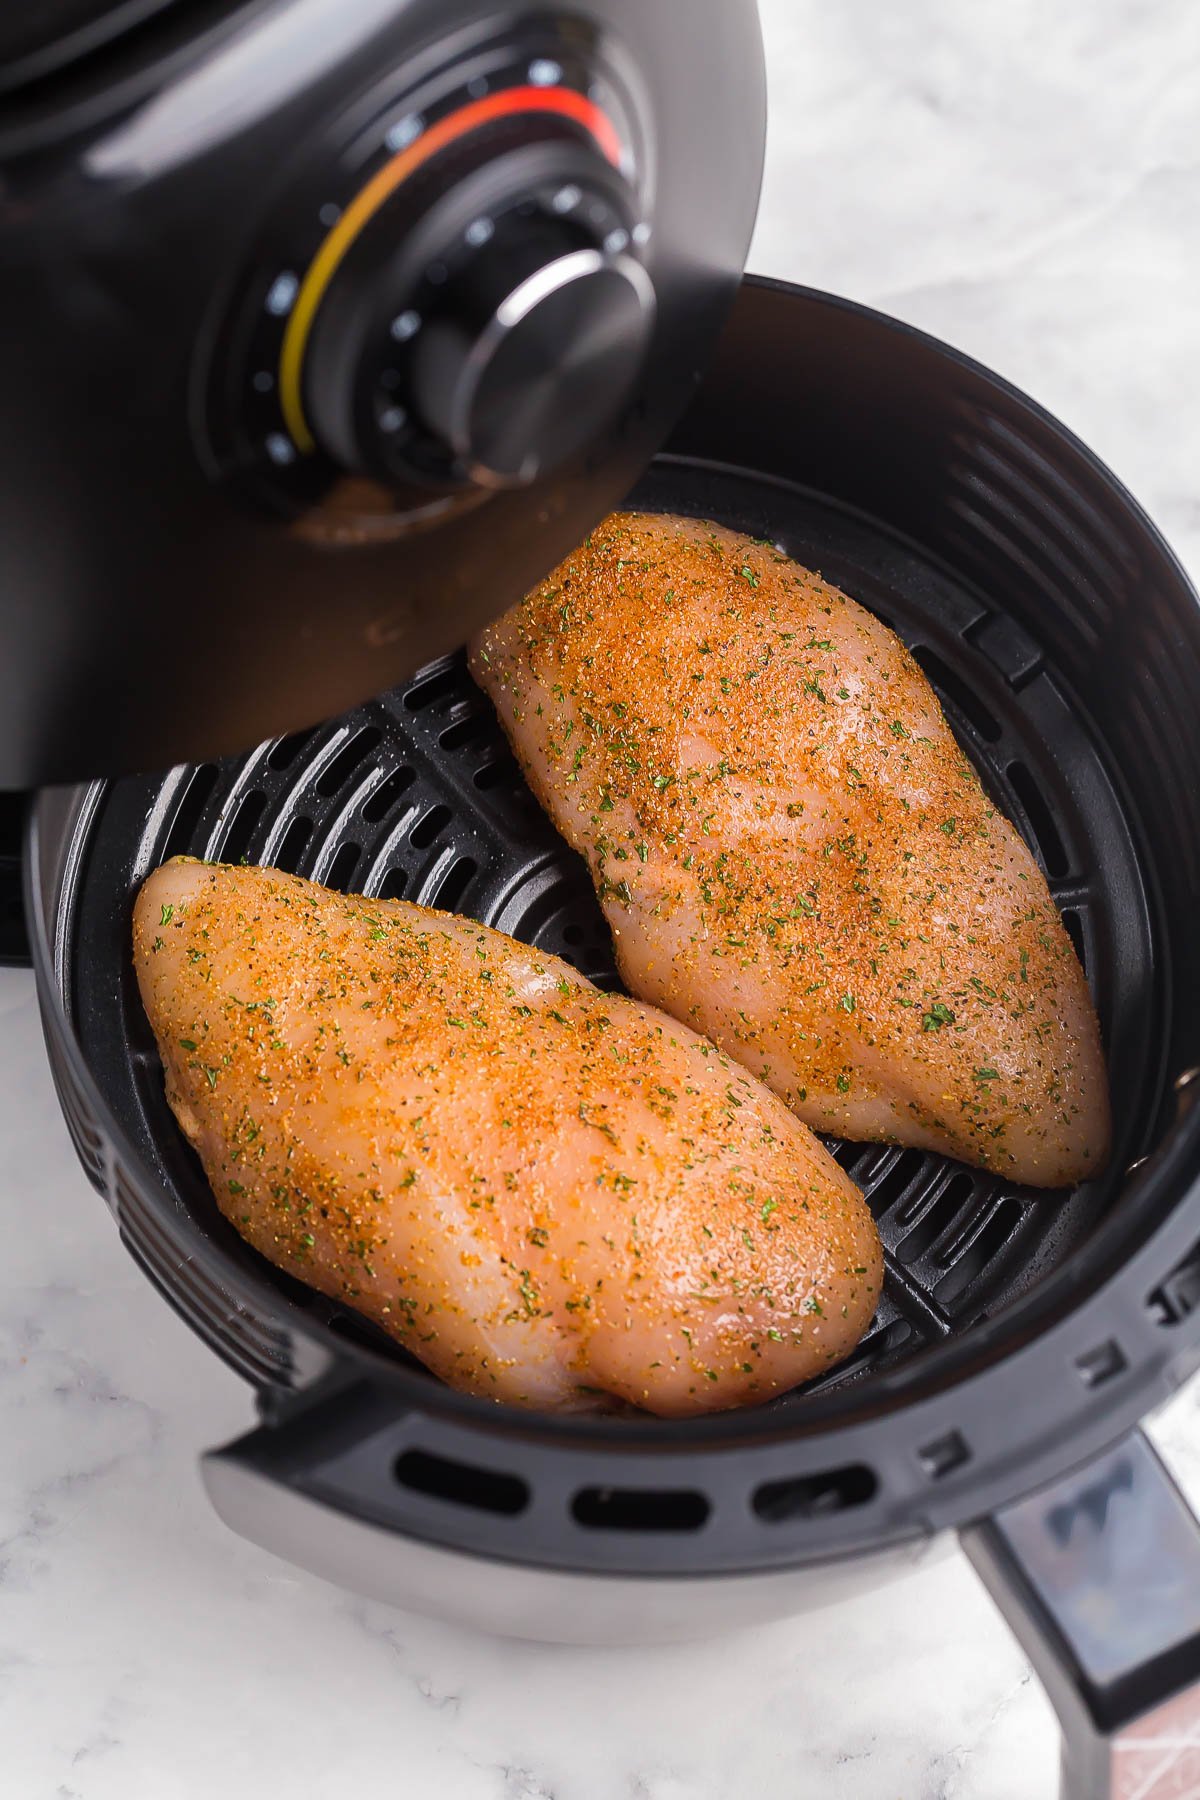 uncooked chicken breasts in air fryer.